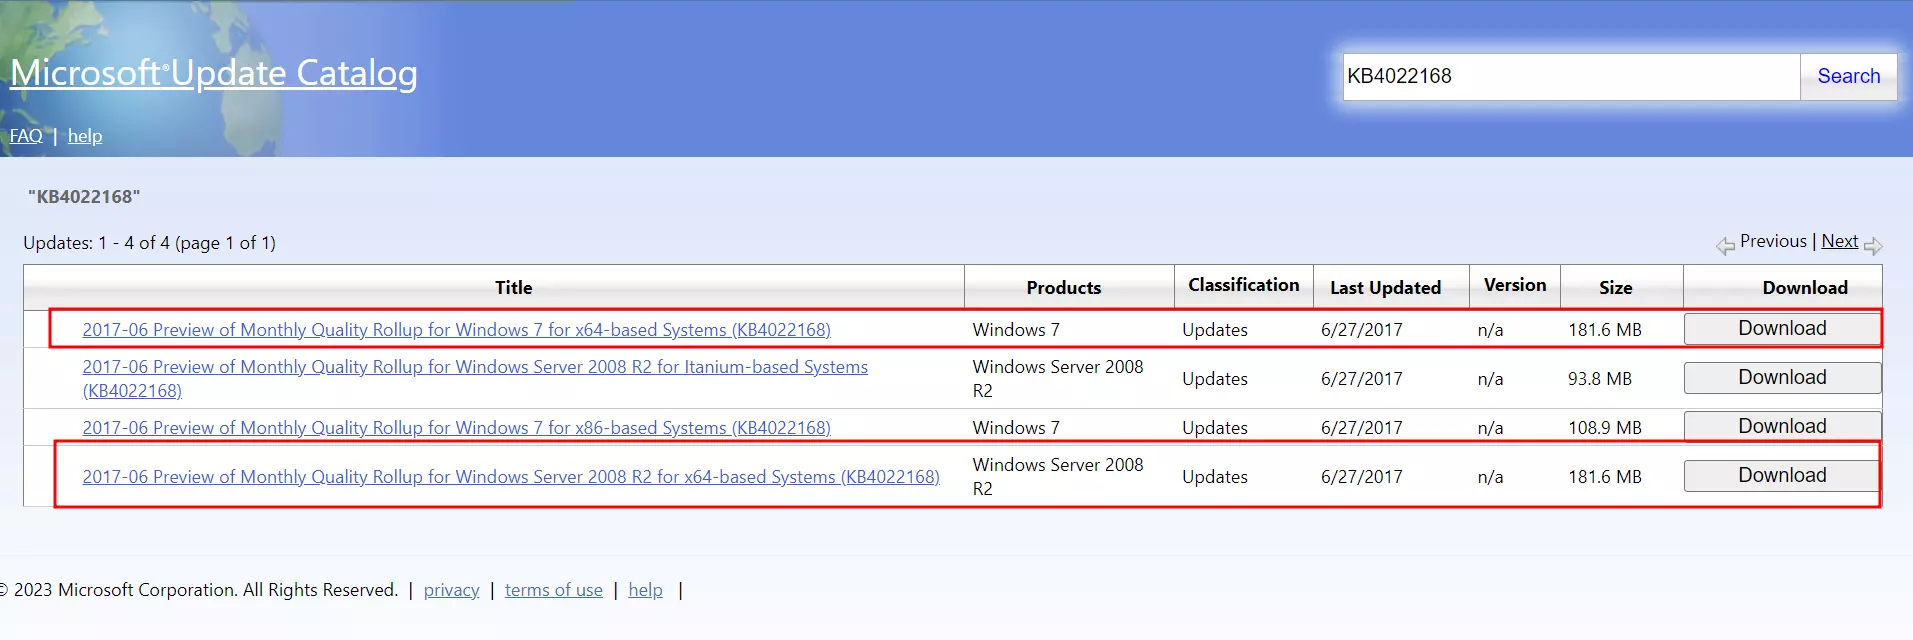 "Microsoft Update Catalogue" for Windows 7